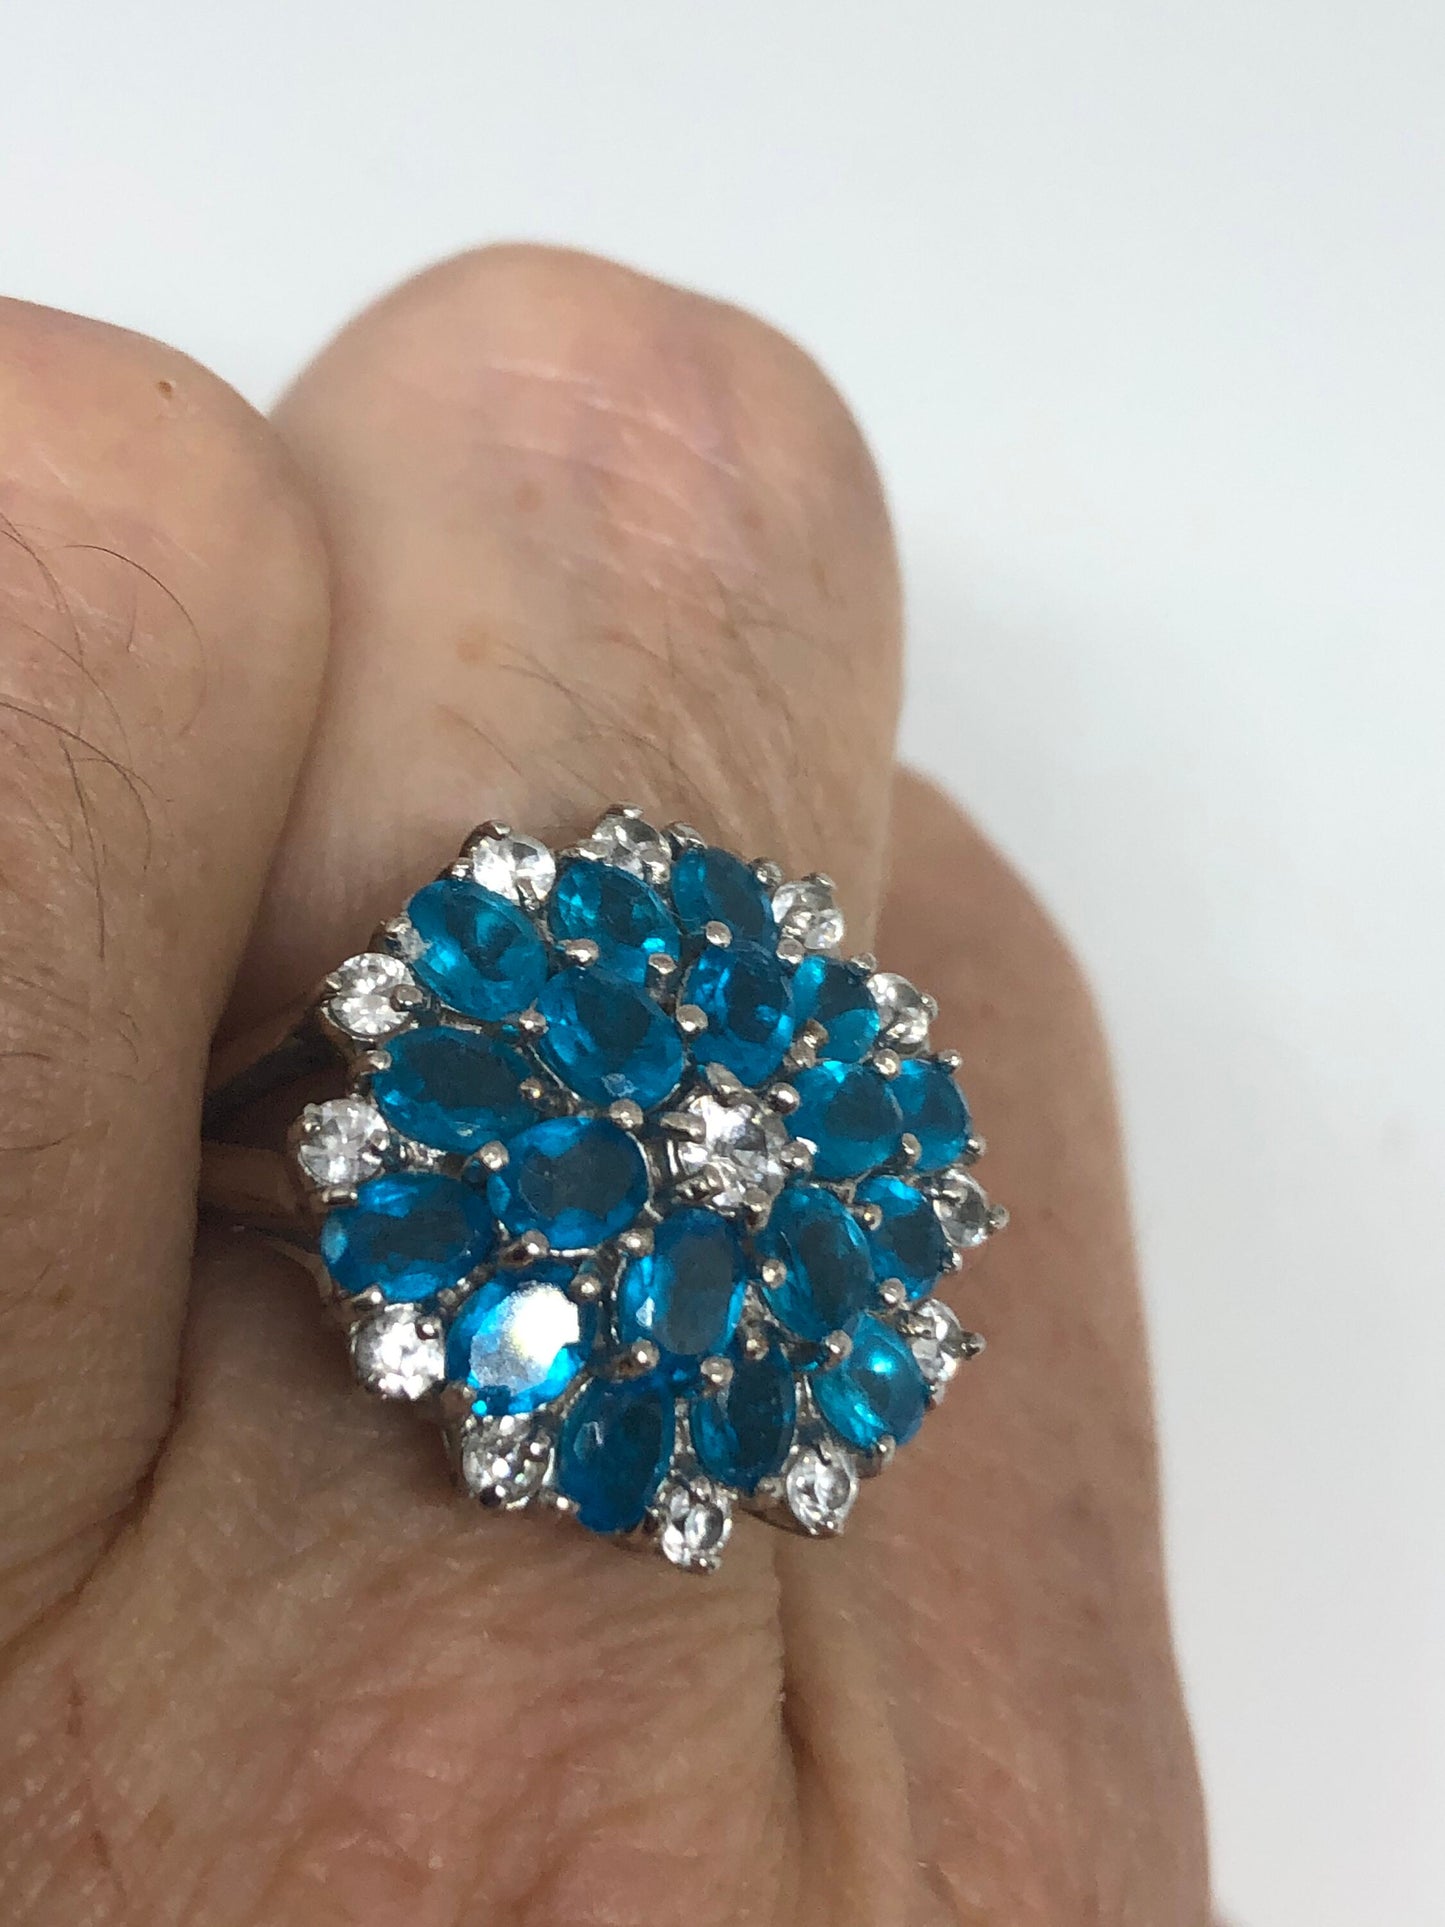 Vintage Blue Flourite 925 Sterling Silver Flower Ring Size 9